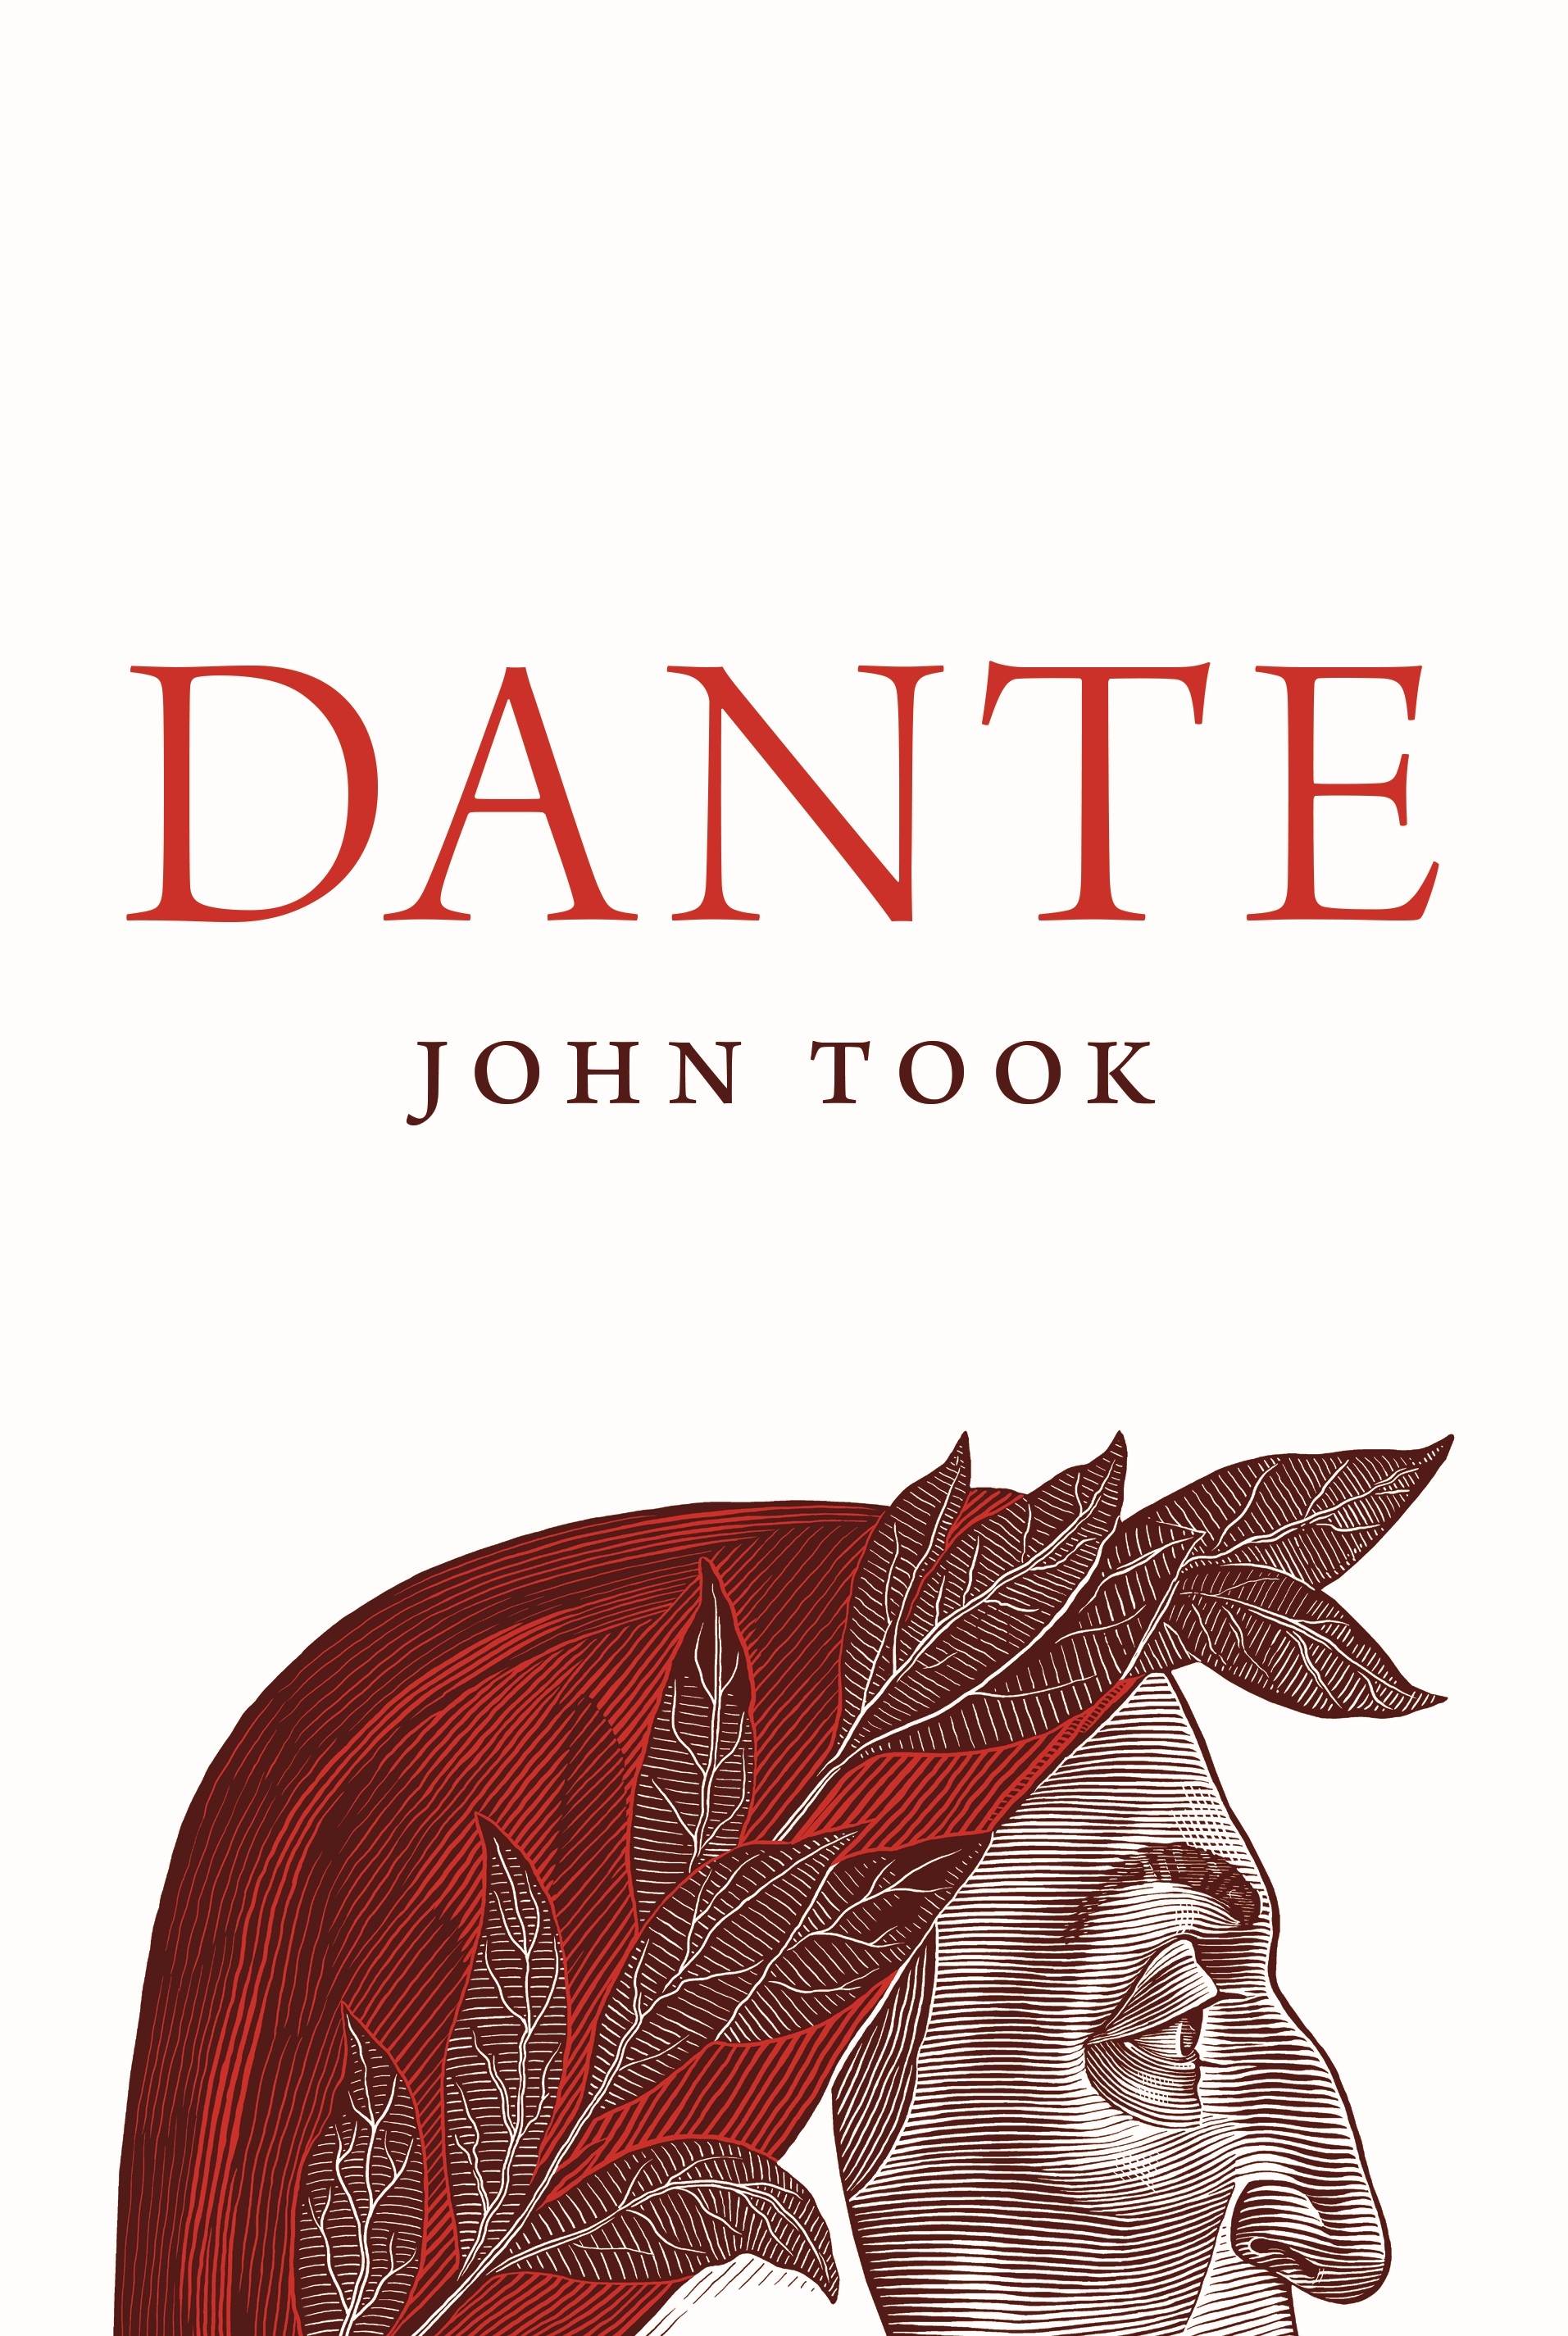 Dante's Inferno ebook by GP Editors - Rakuten Kobo